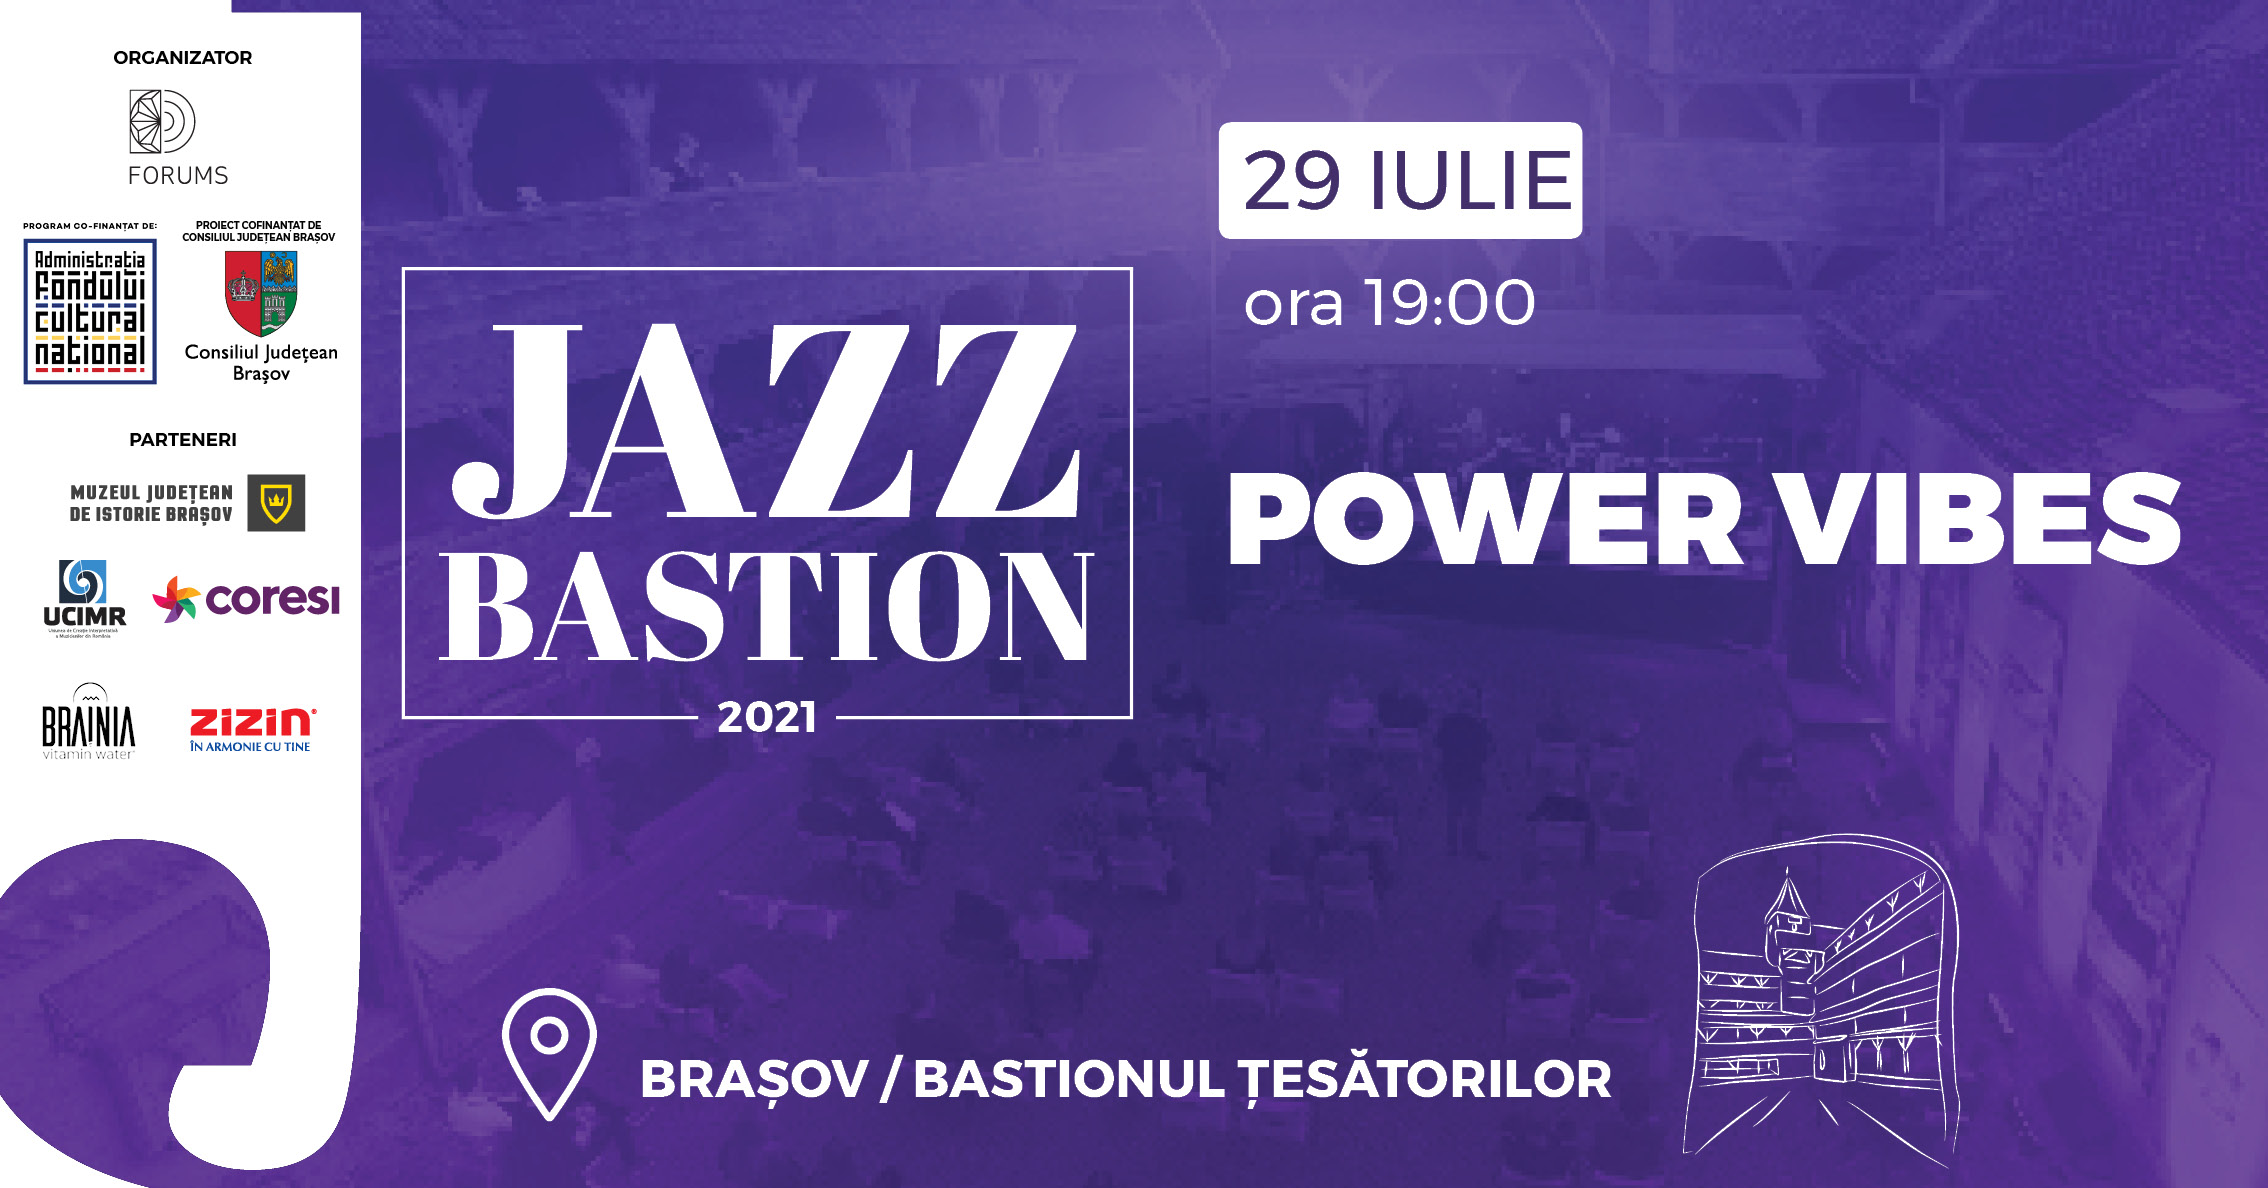 Concert Power Vibes - Jazz Bastion 2021 